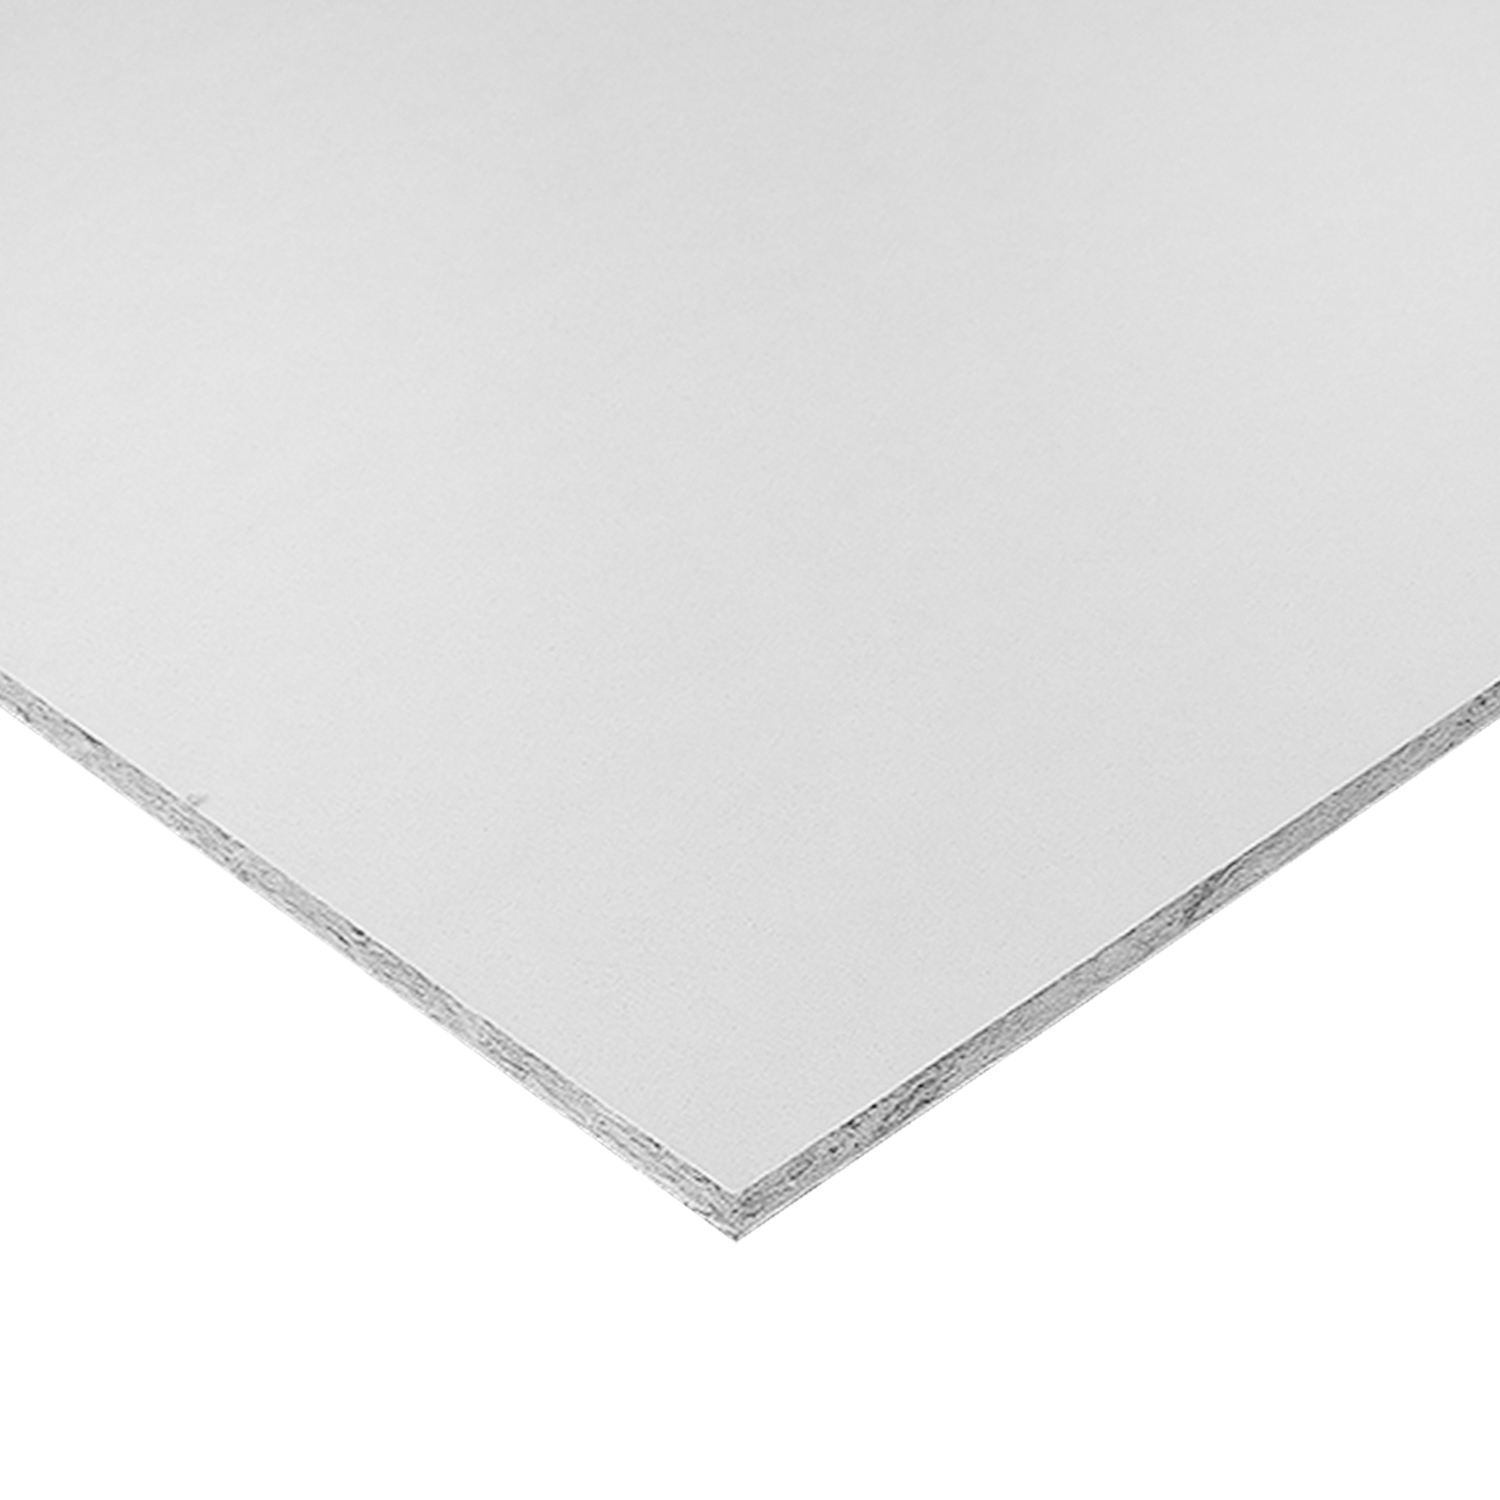 ROCKFON ARTIC Flat Ceiling Tiles 1200mm X 600mm (Box Qty: 16)